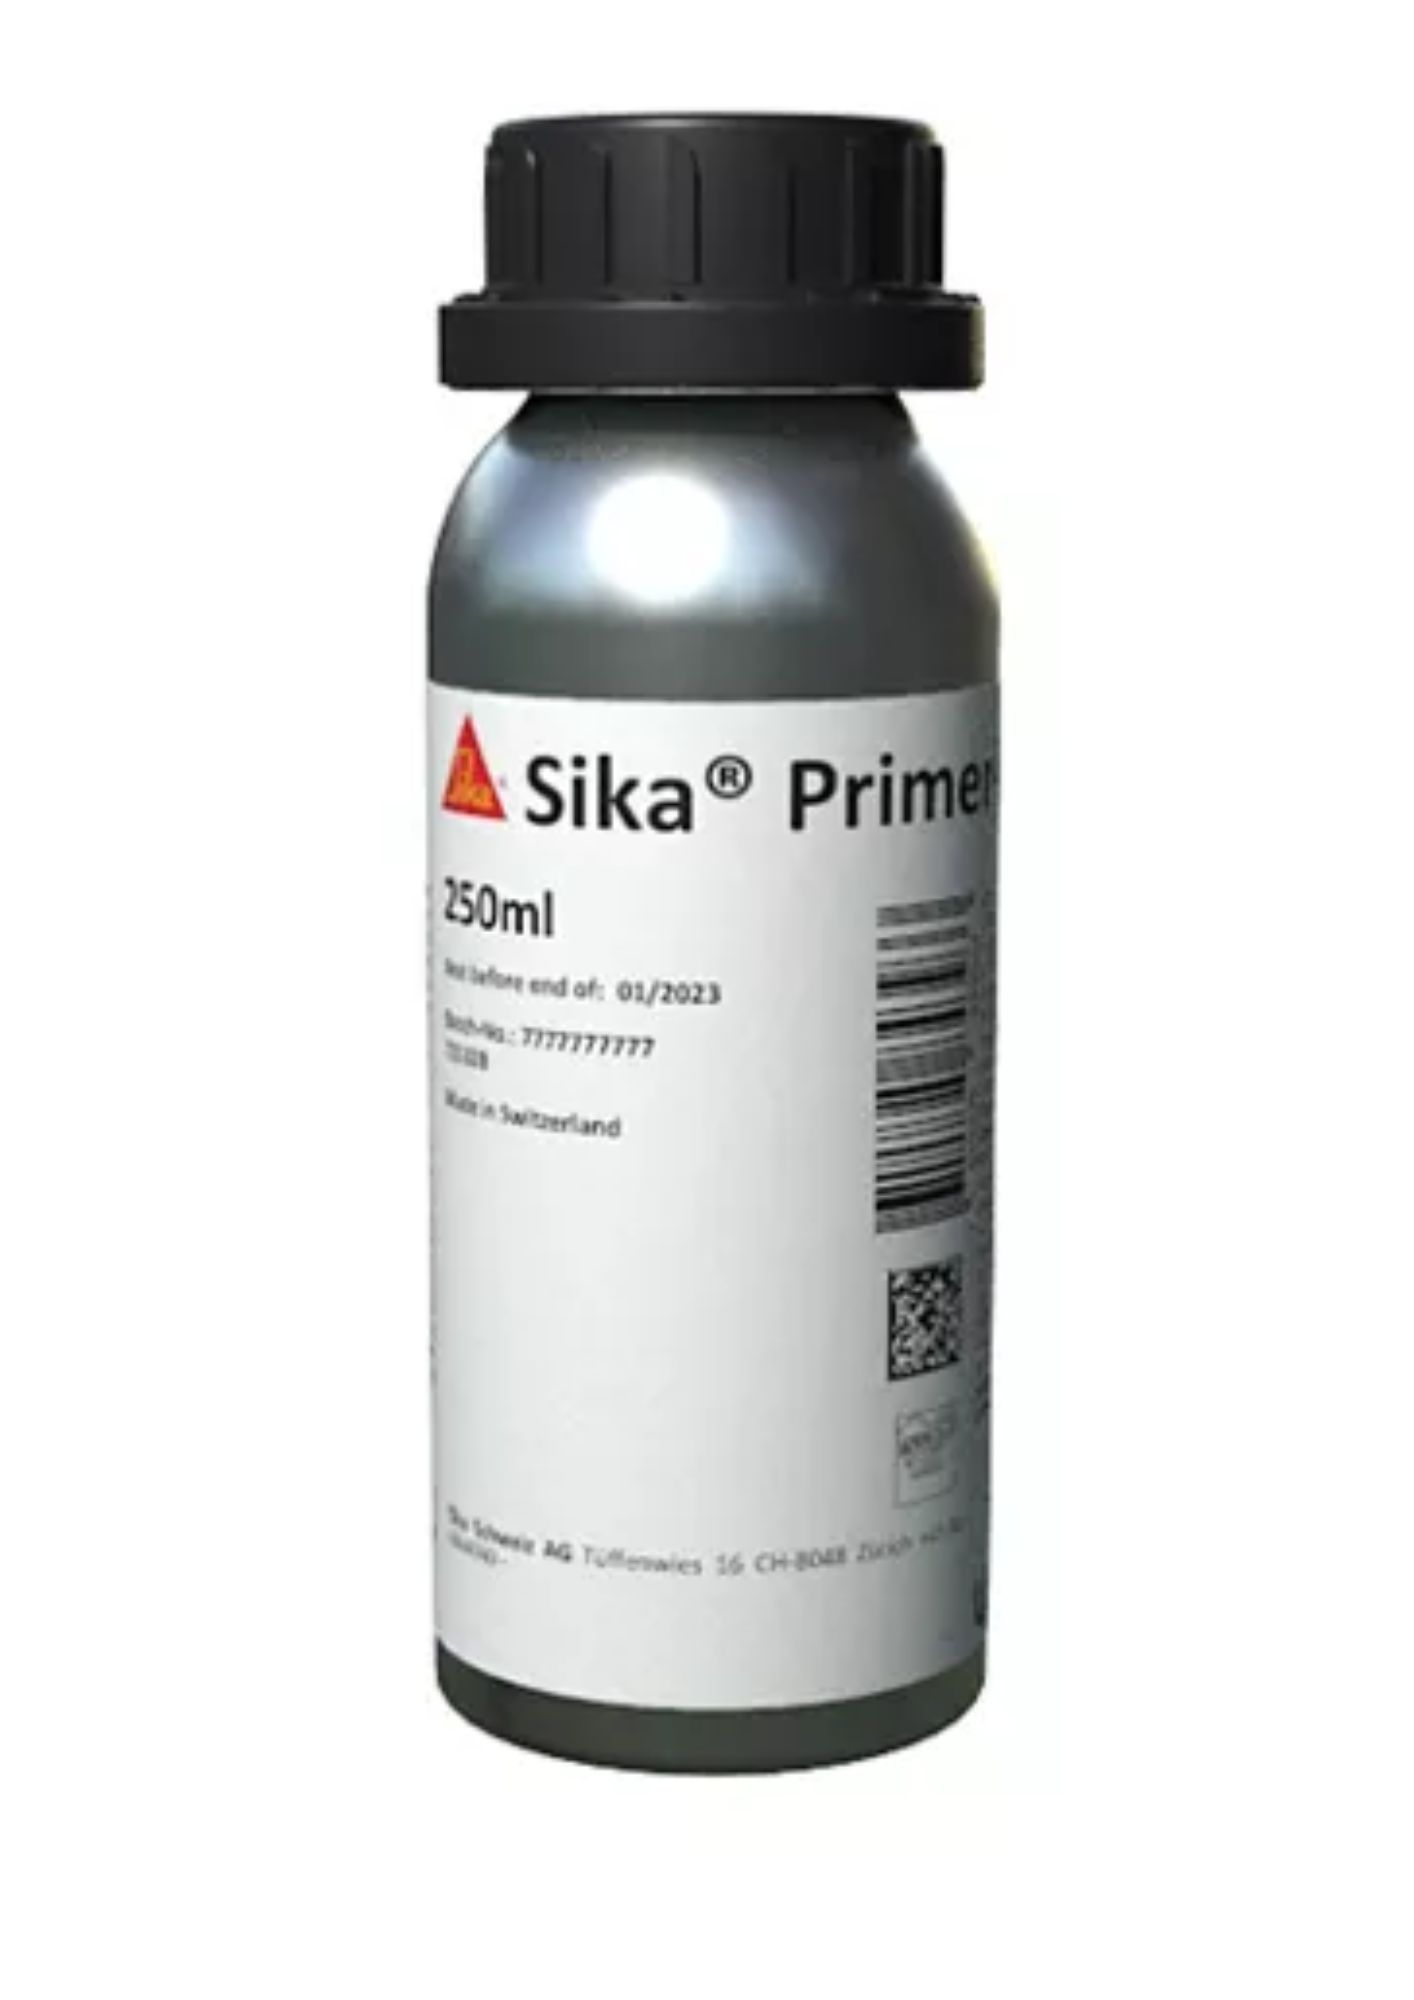 sika primer-507, 250ml